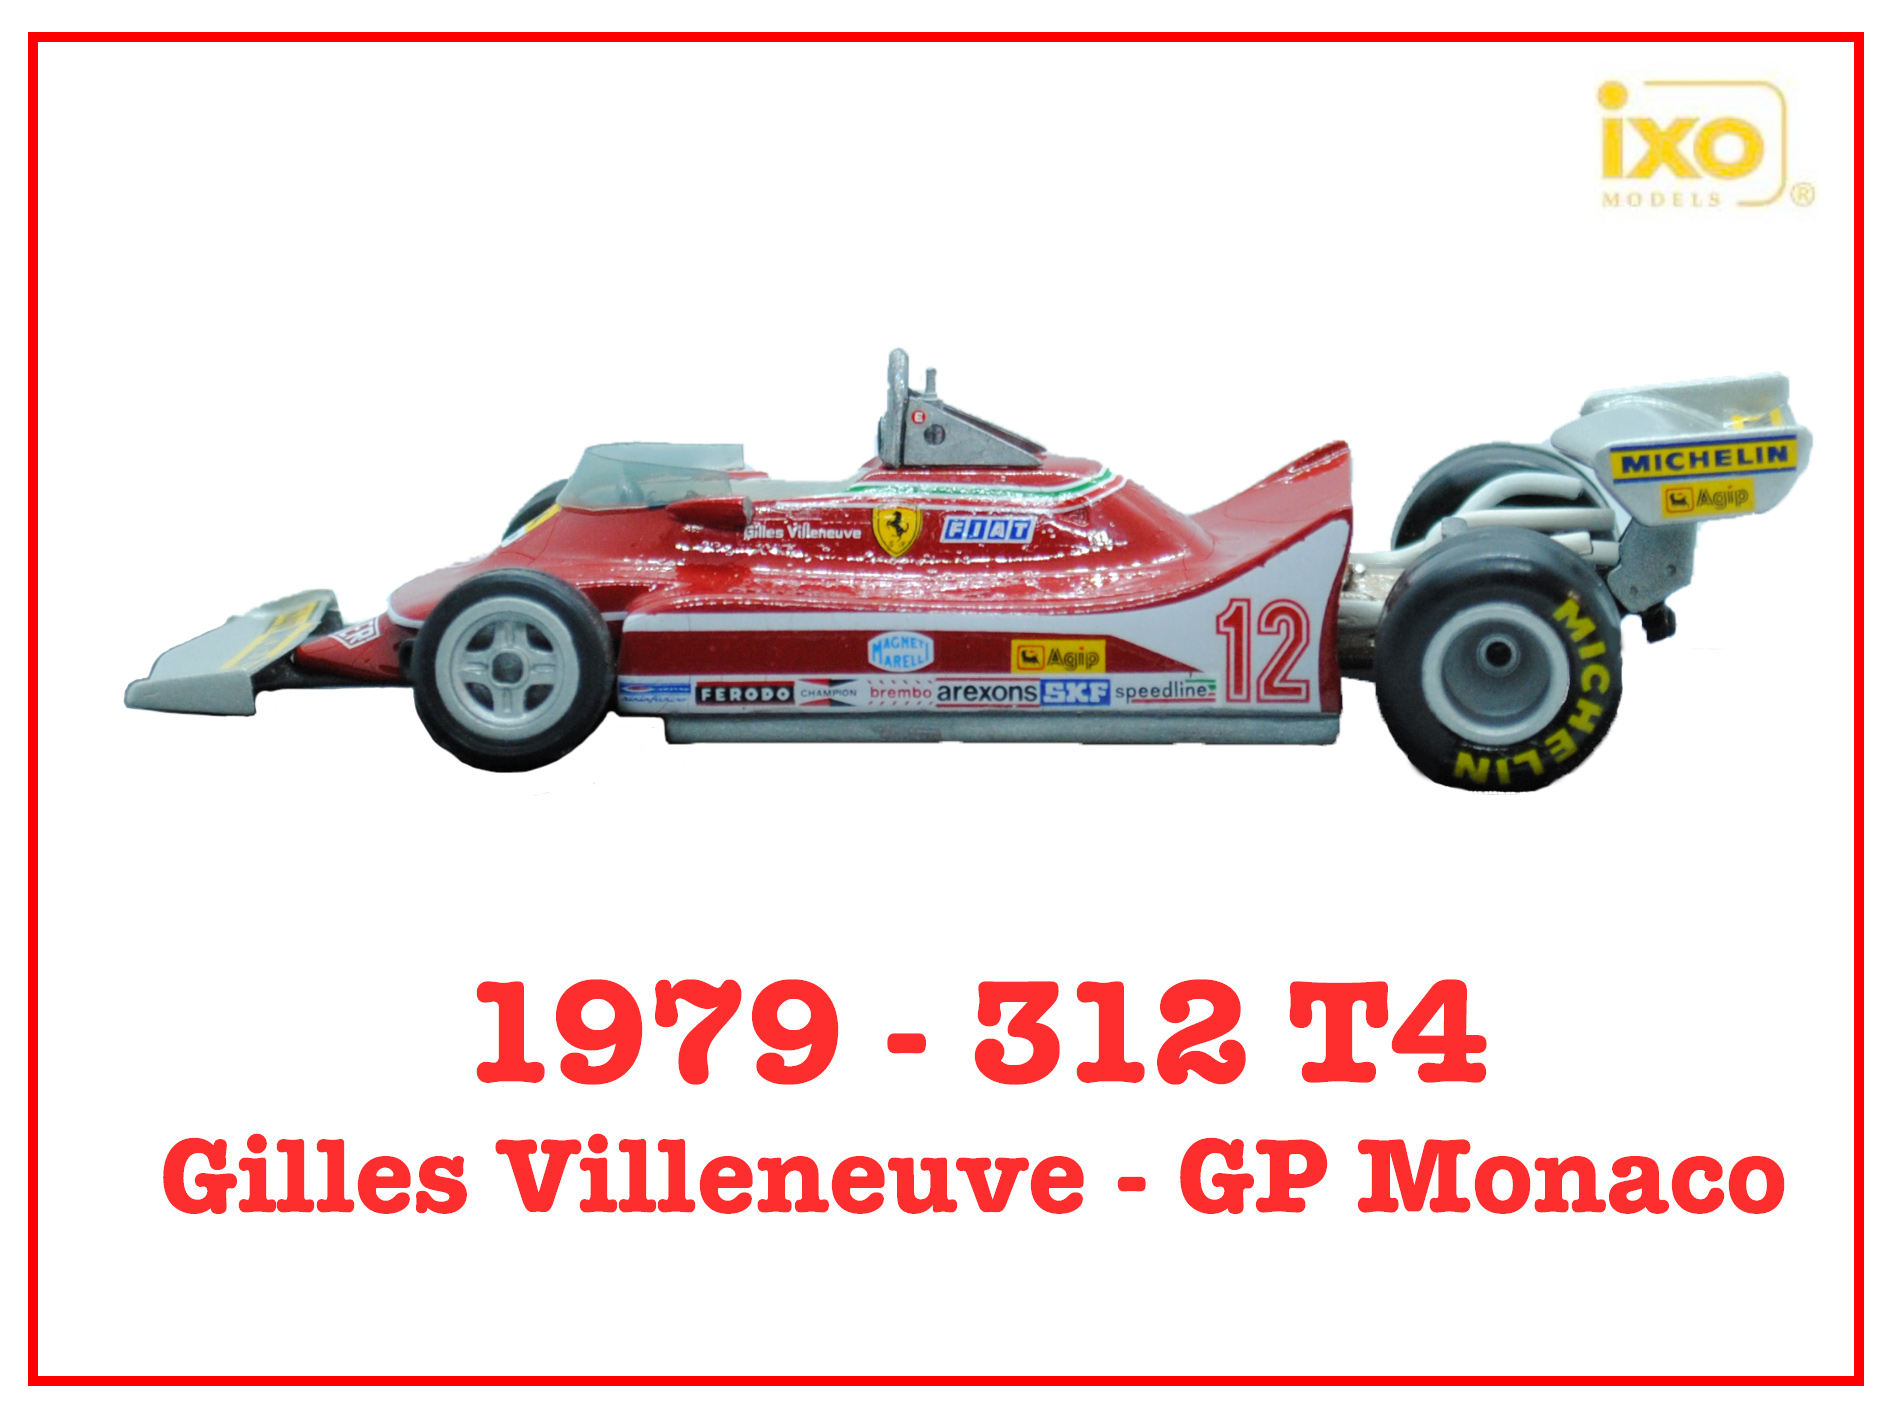 Immagine 312 T4 Gilles Villeneuve